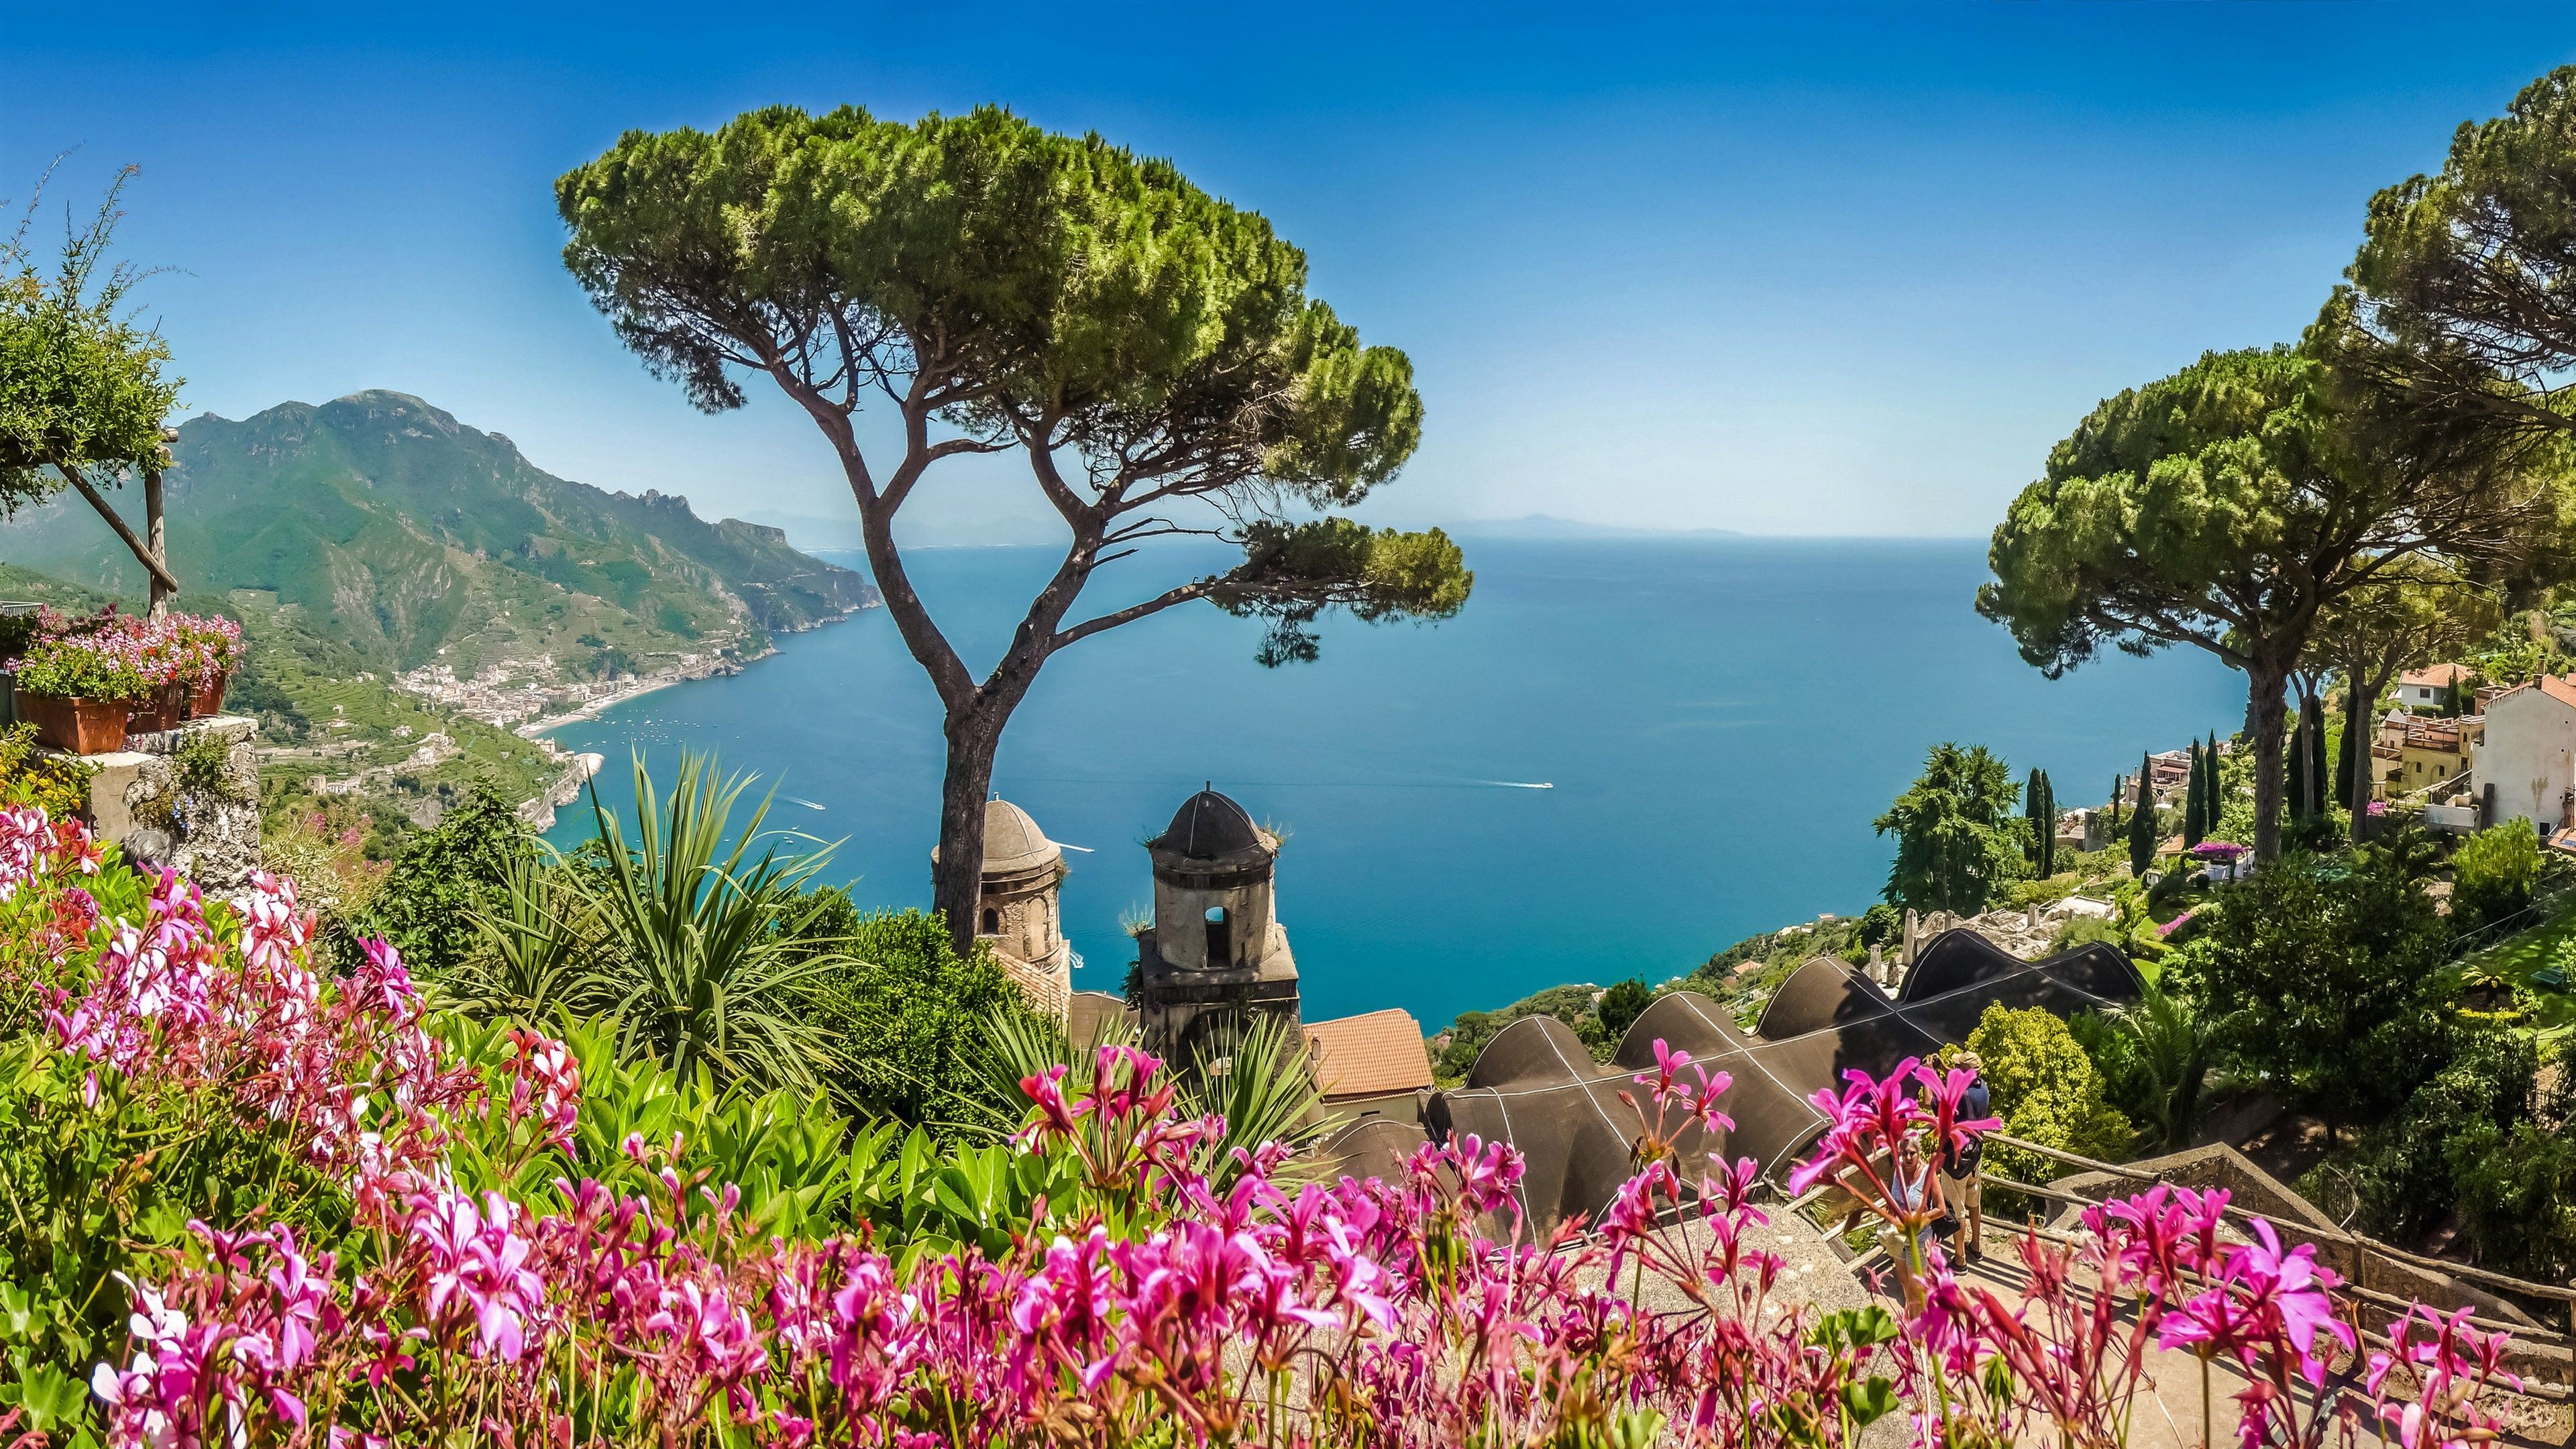 Amalfi Coast in Italy 4k Ultra HD Wallpaper